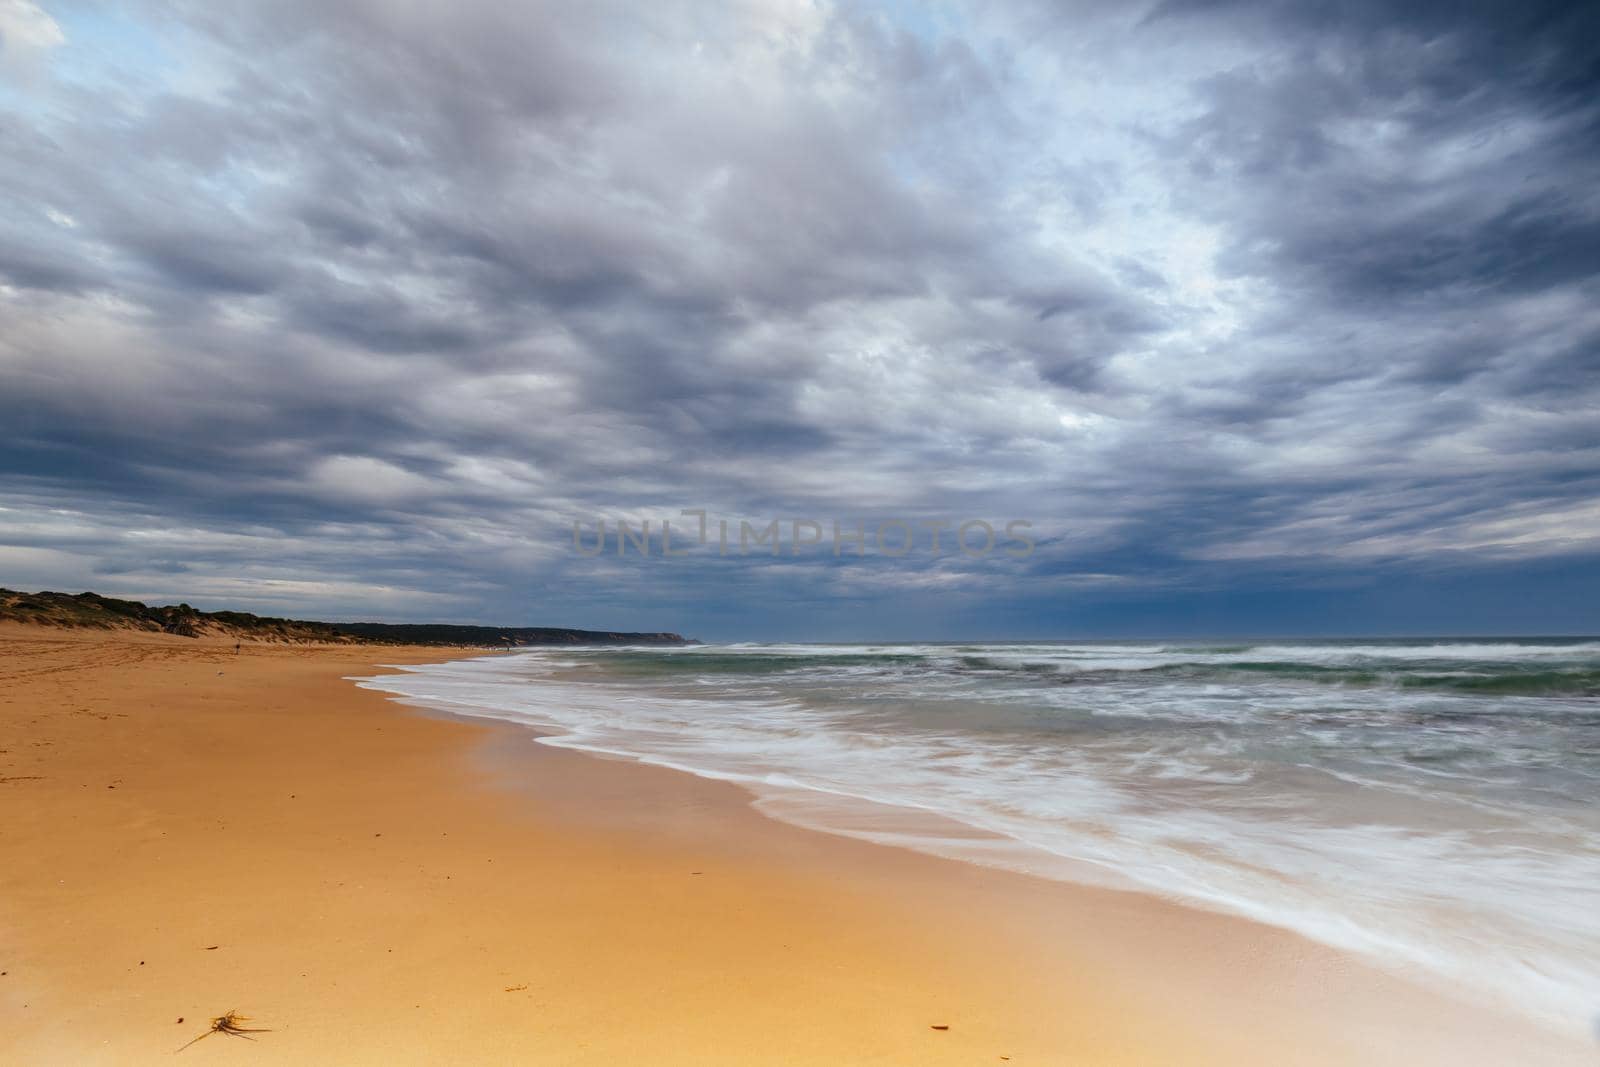 Gunnamatta Ocean Beach in Melbourne Australia by FiledIMAGE